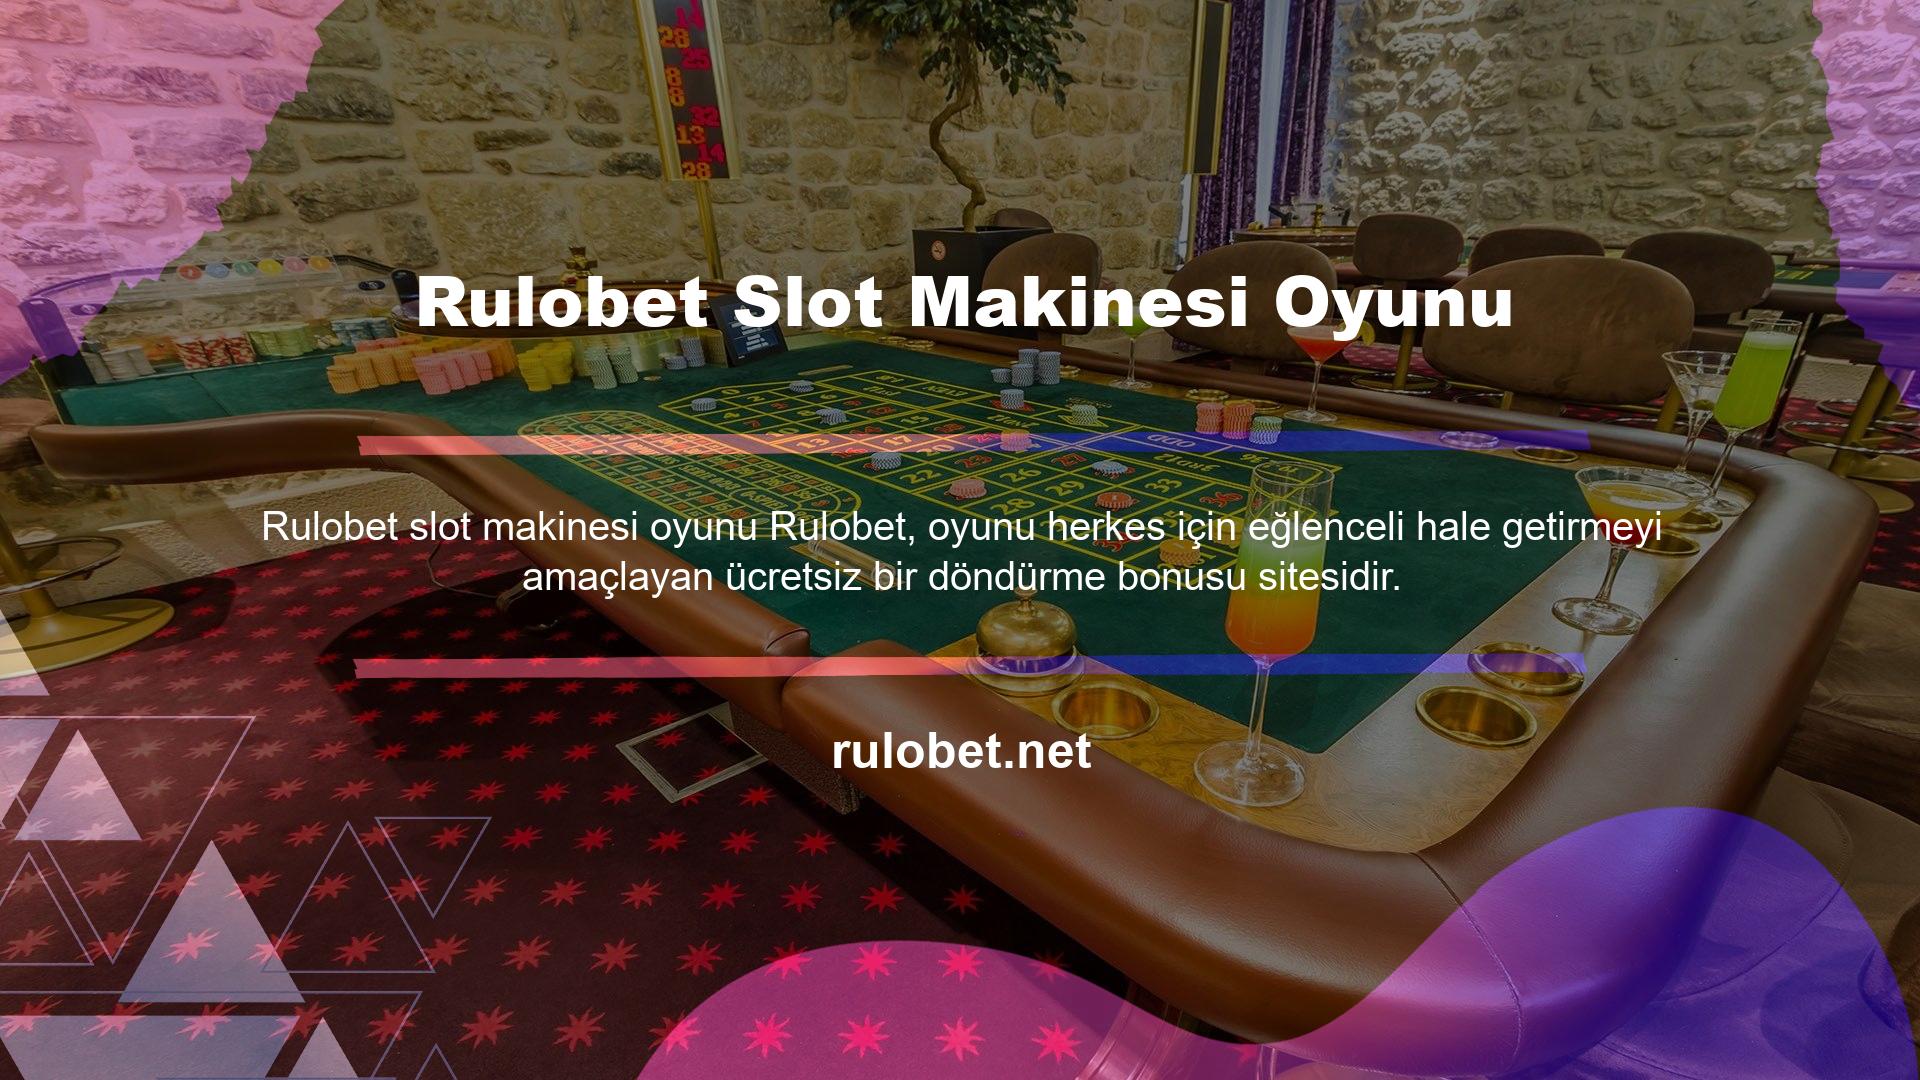 Rulobet Slot Makinesi Oyunu